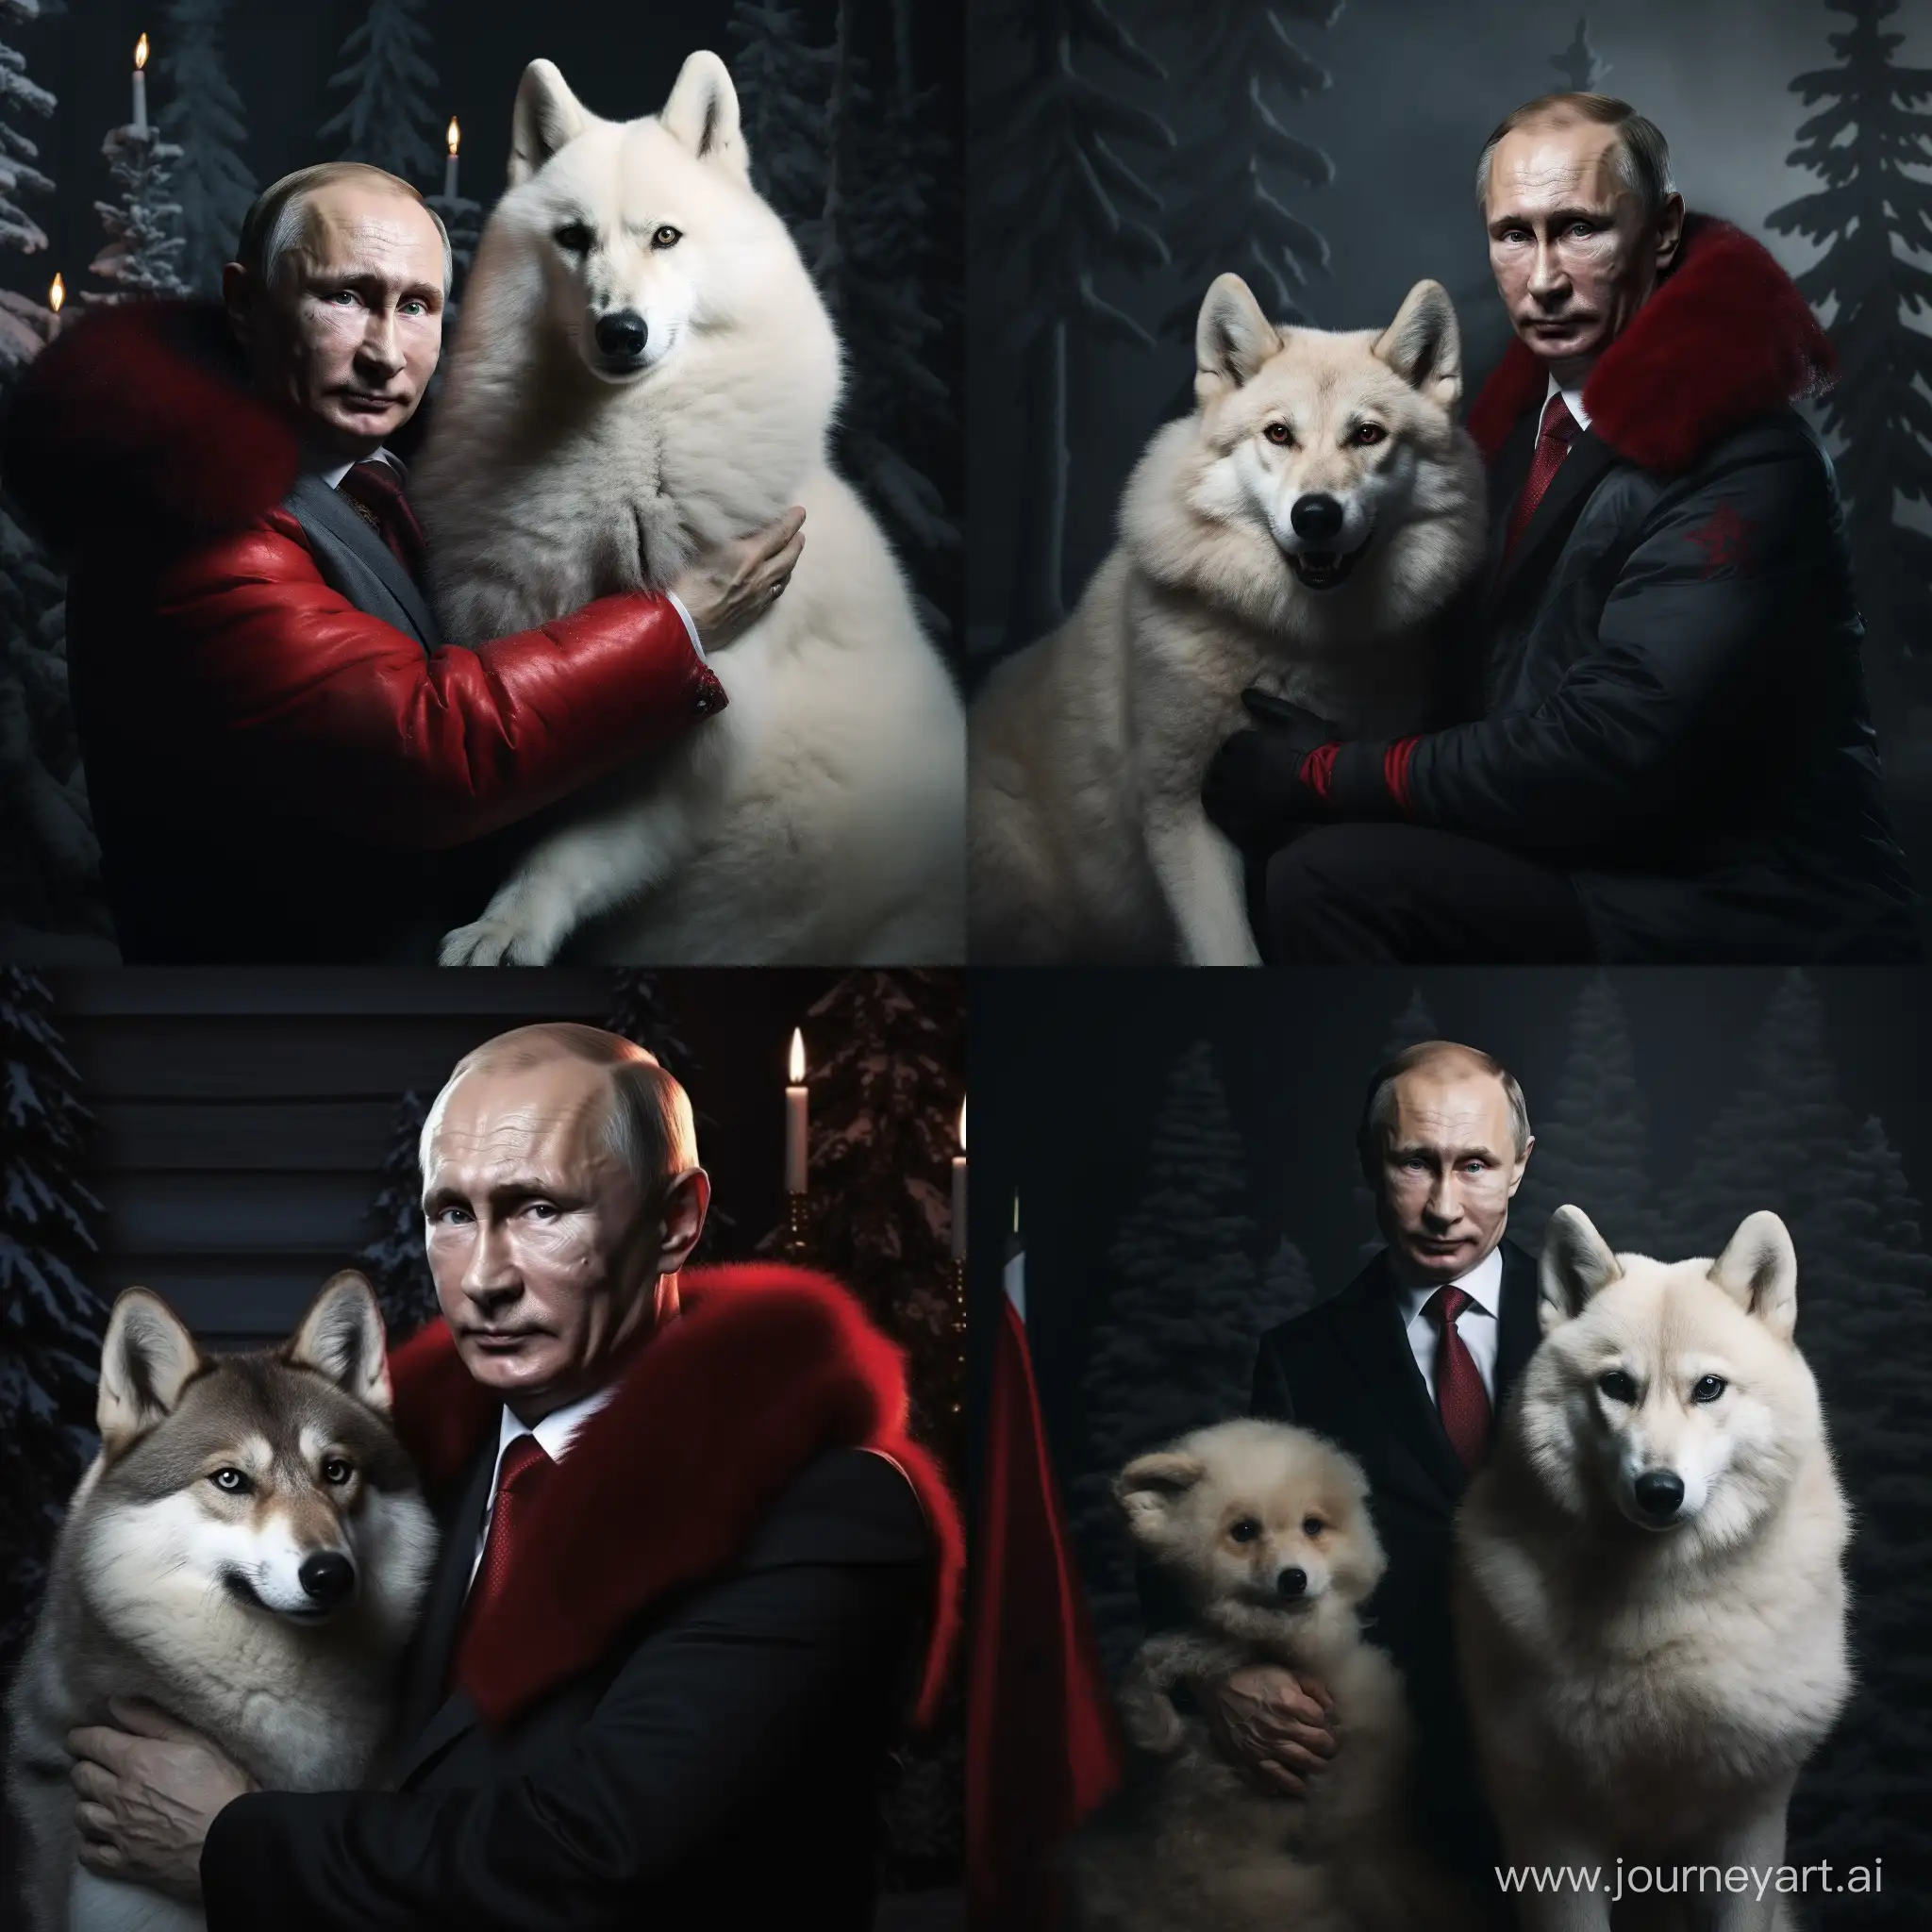 Vladimir-Putin-in-Santa-Hat-with-Baby-Arctic-Fox-Festive-Elegance-in-a-Dark-Winter-Scene